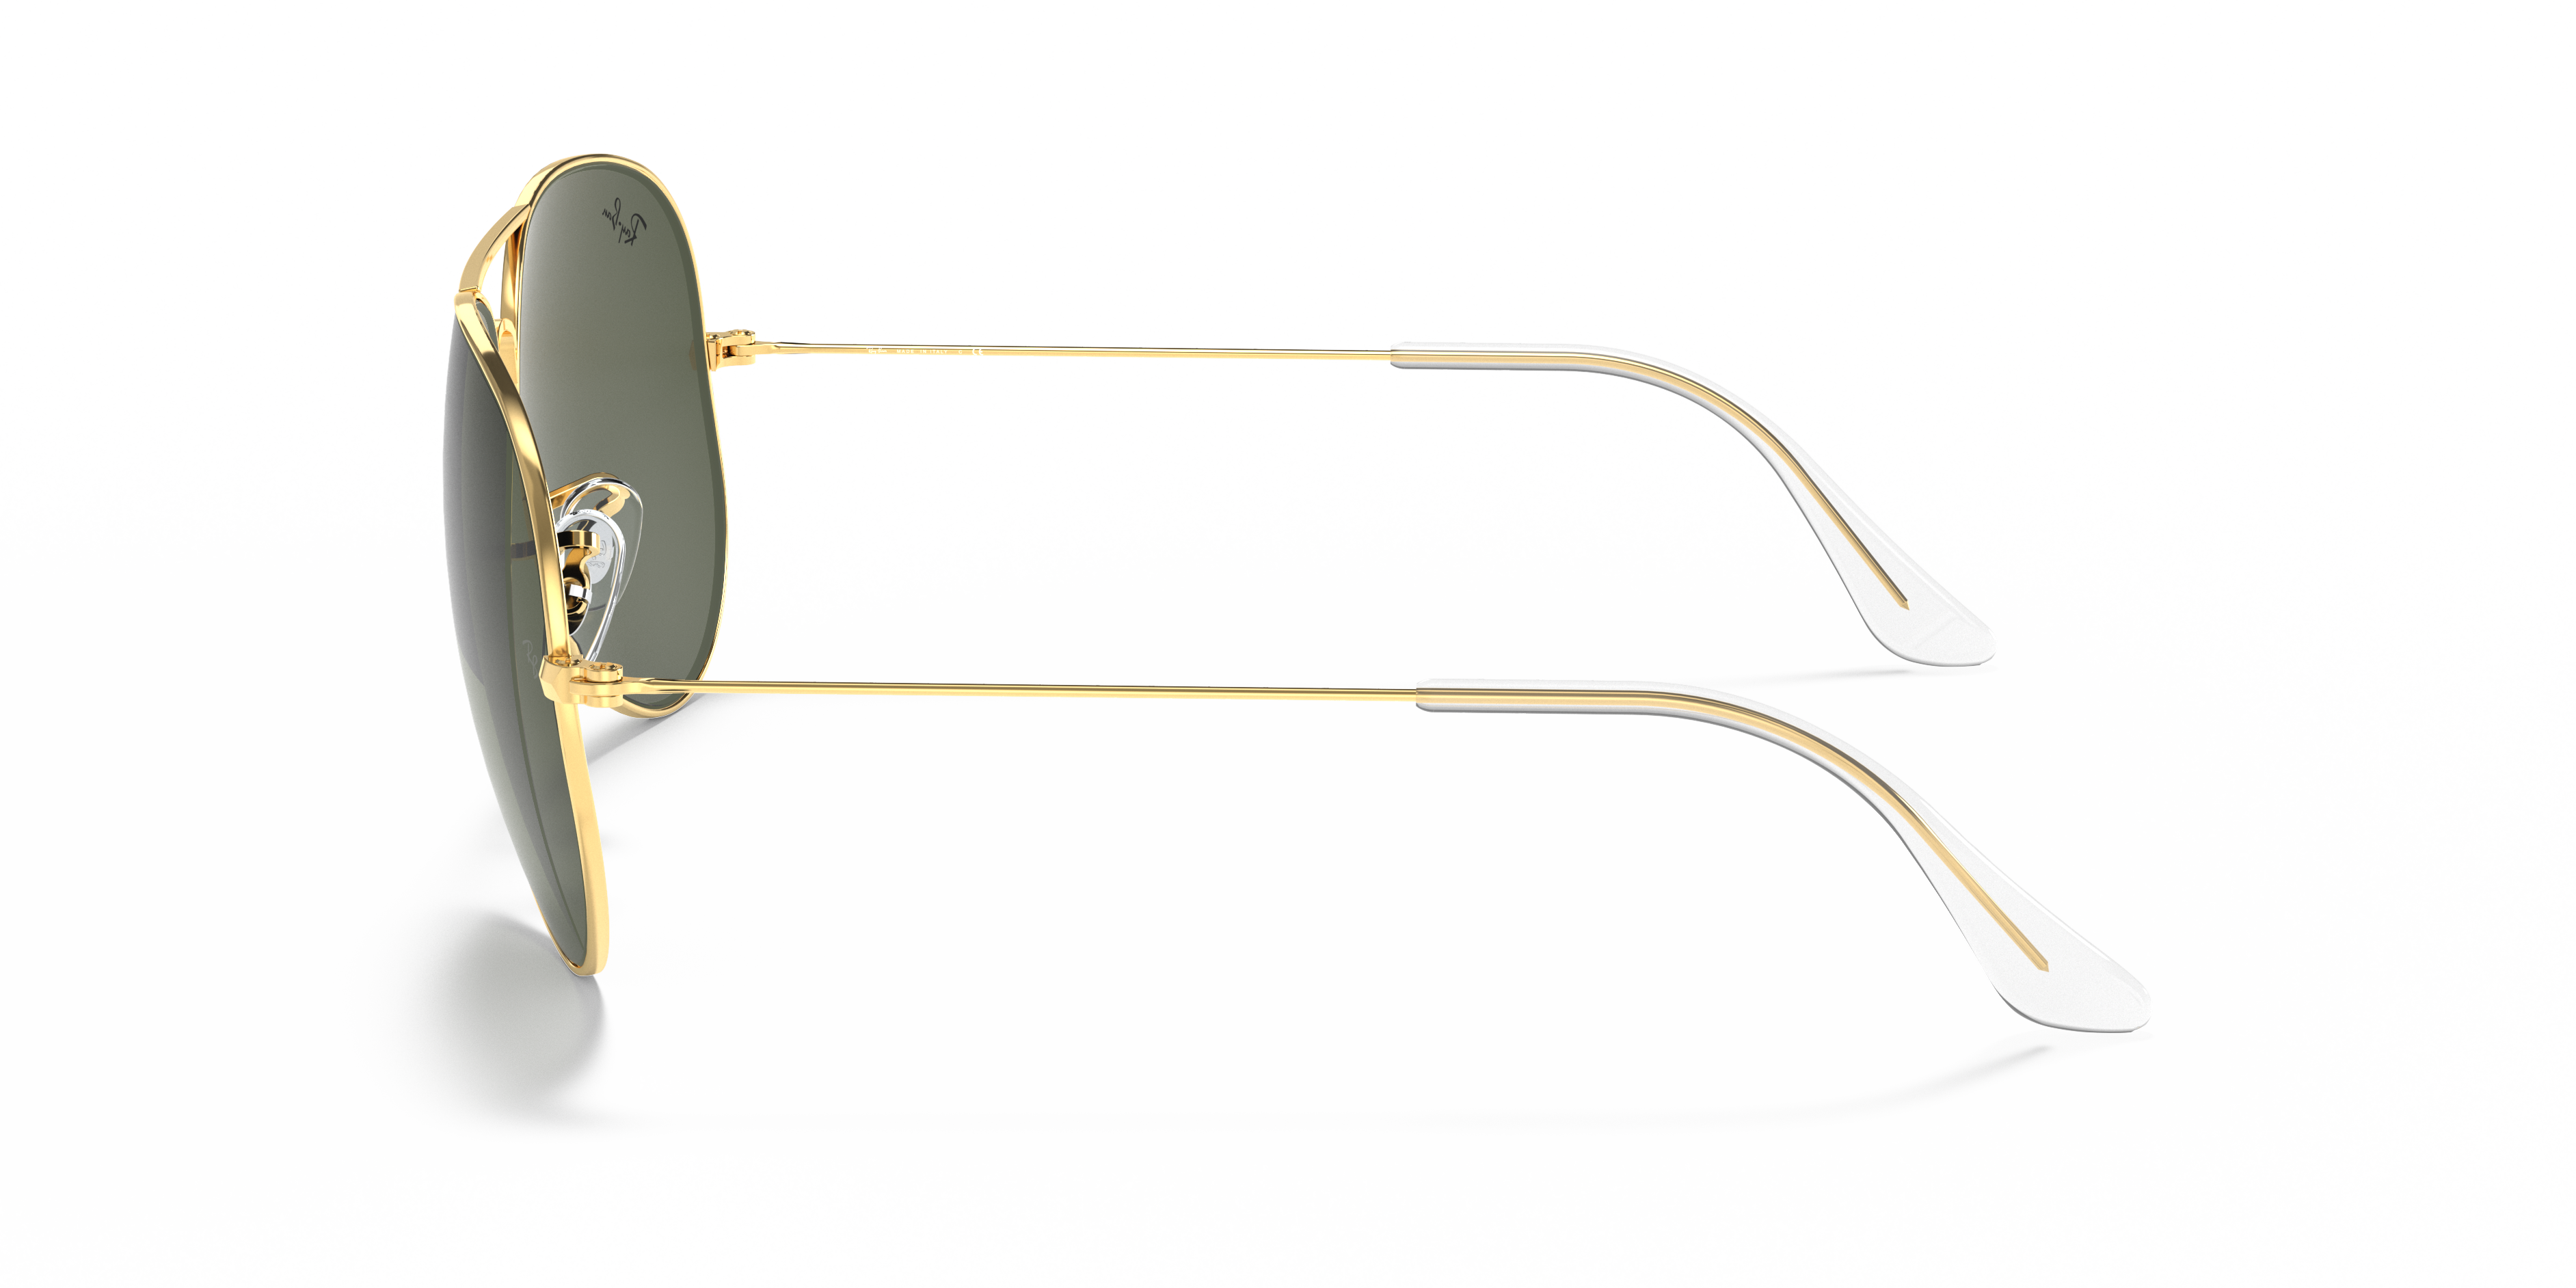 Aviator Large Metal Ii Sunglasses in Gold and Green | Ray-Ban®